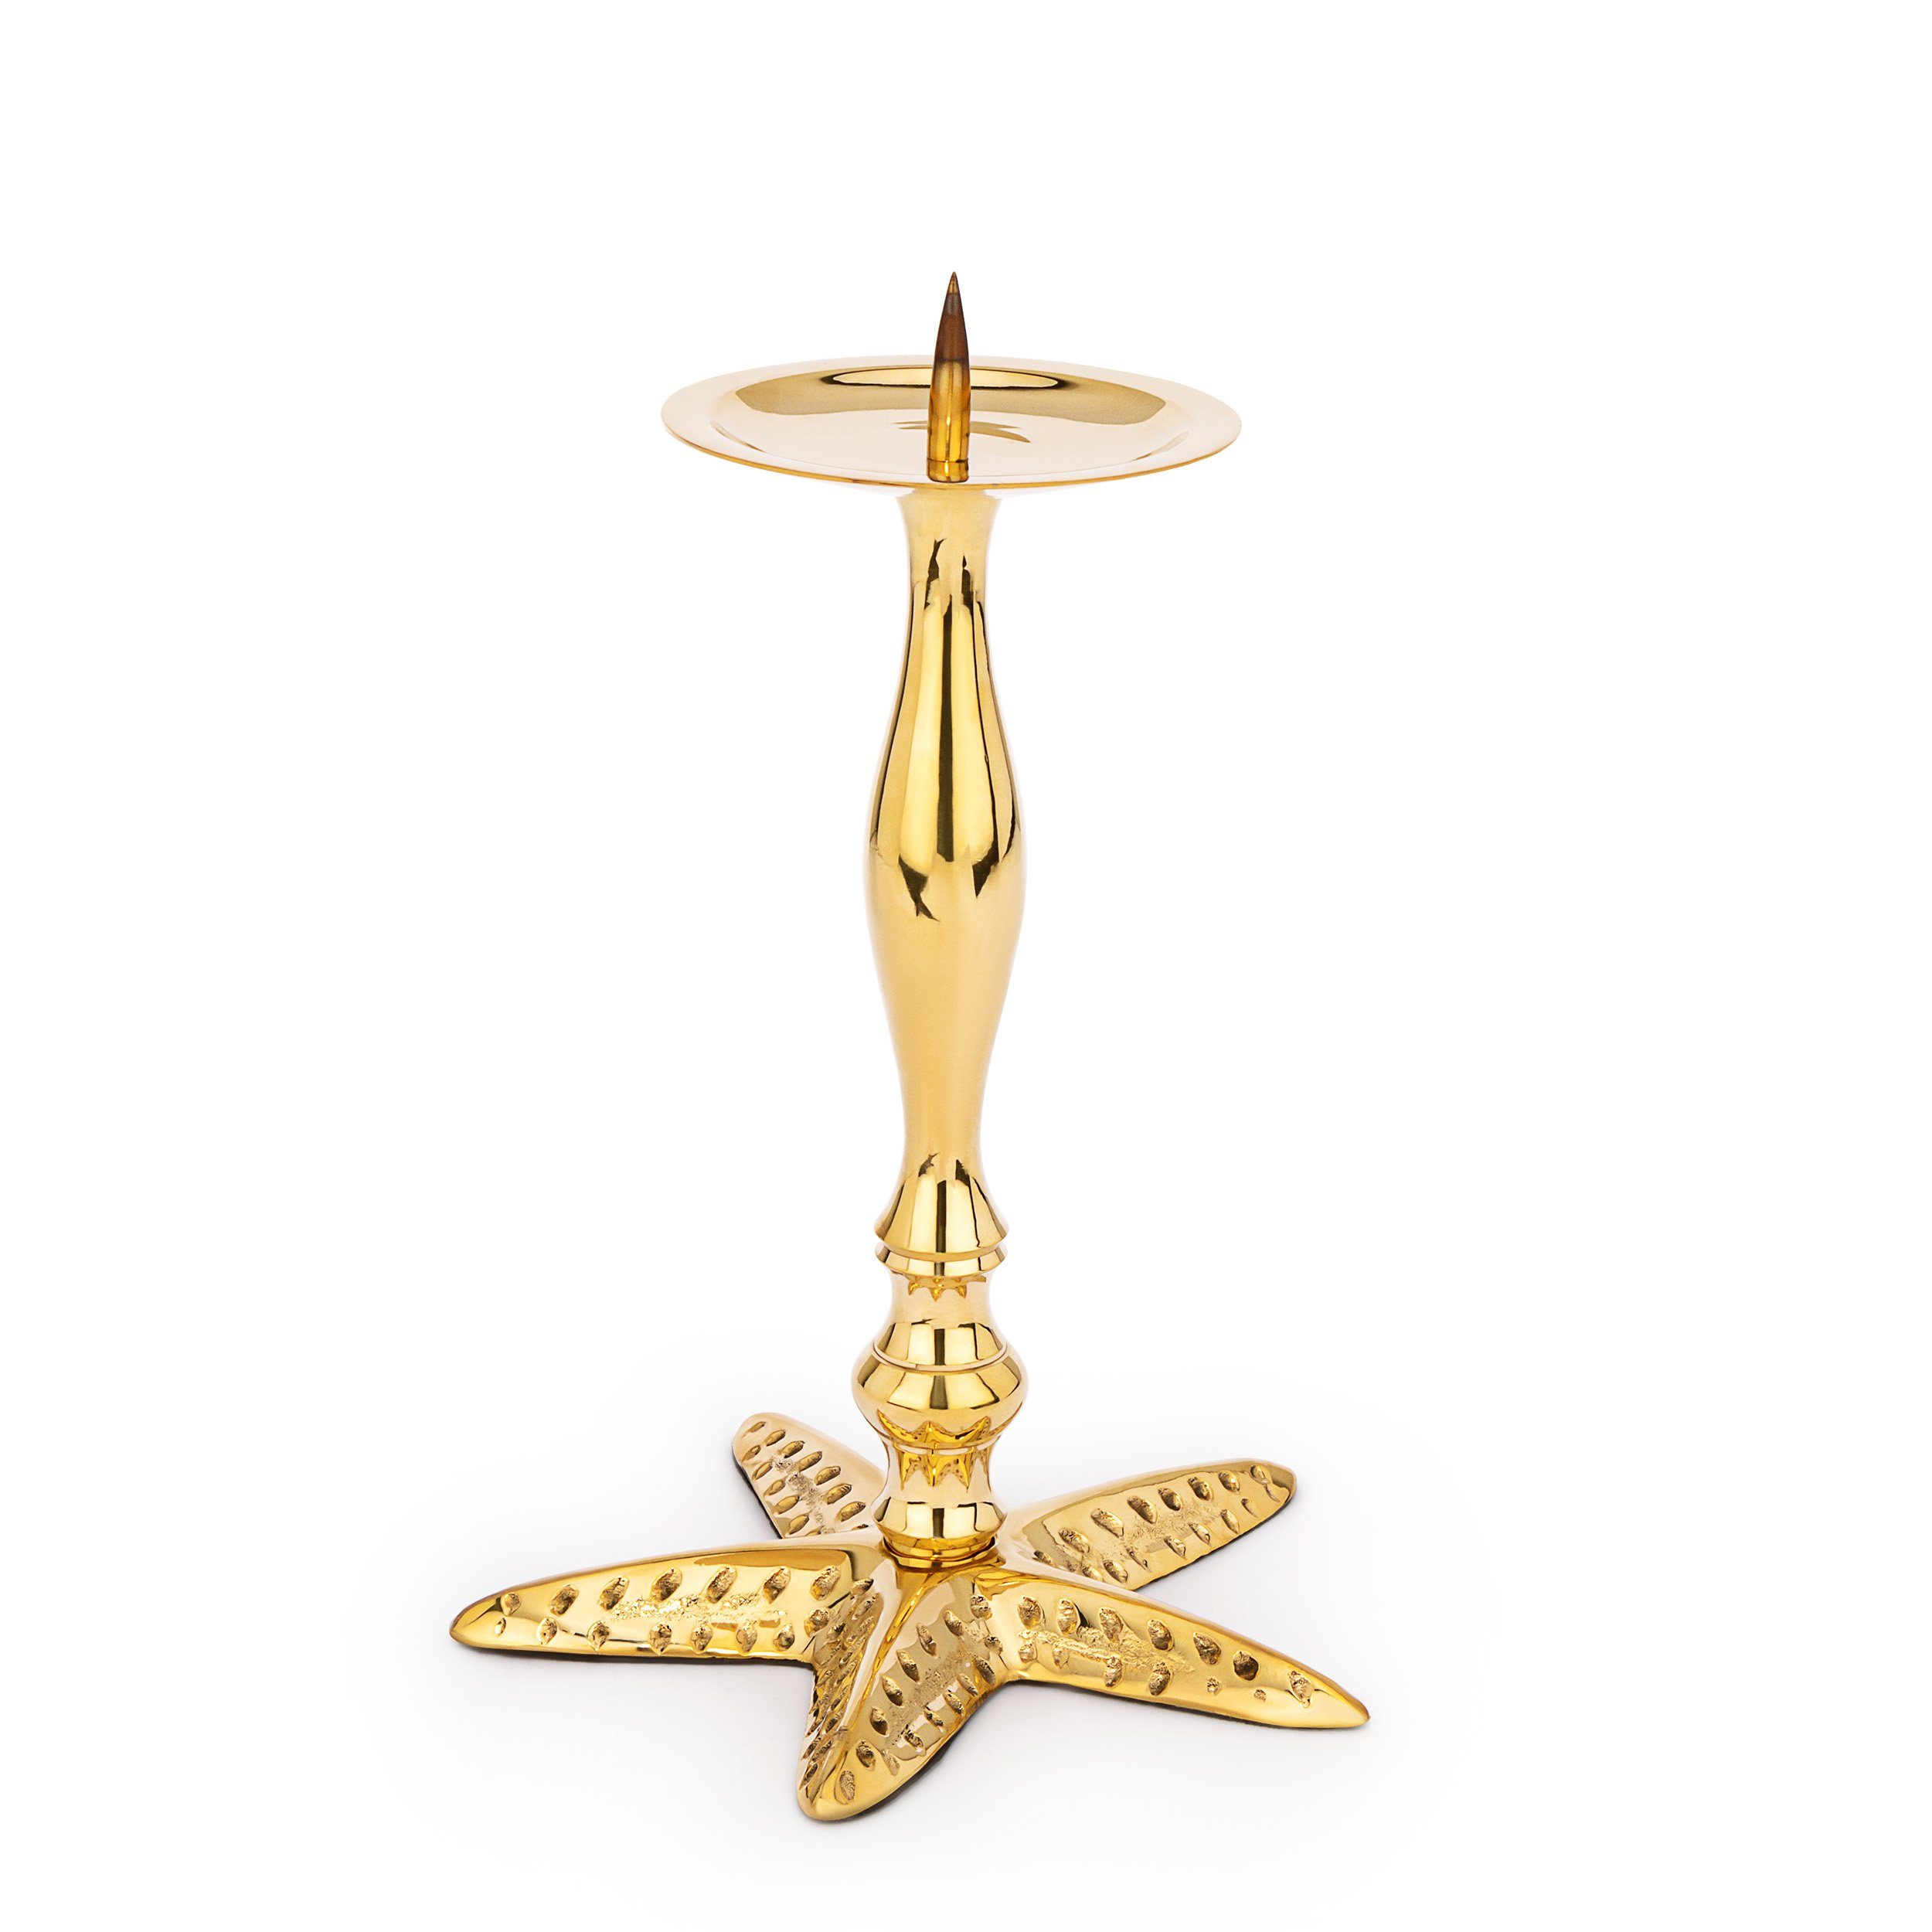 NKlaus Kerzenhalter Maritim Messing Seestern 23cm Kerz (Kerzenhalter) gold aus Kerzenständer hoch Moderne